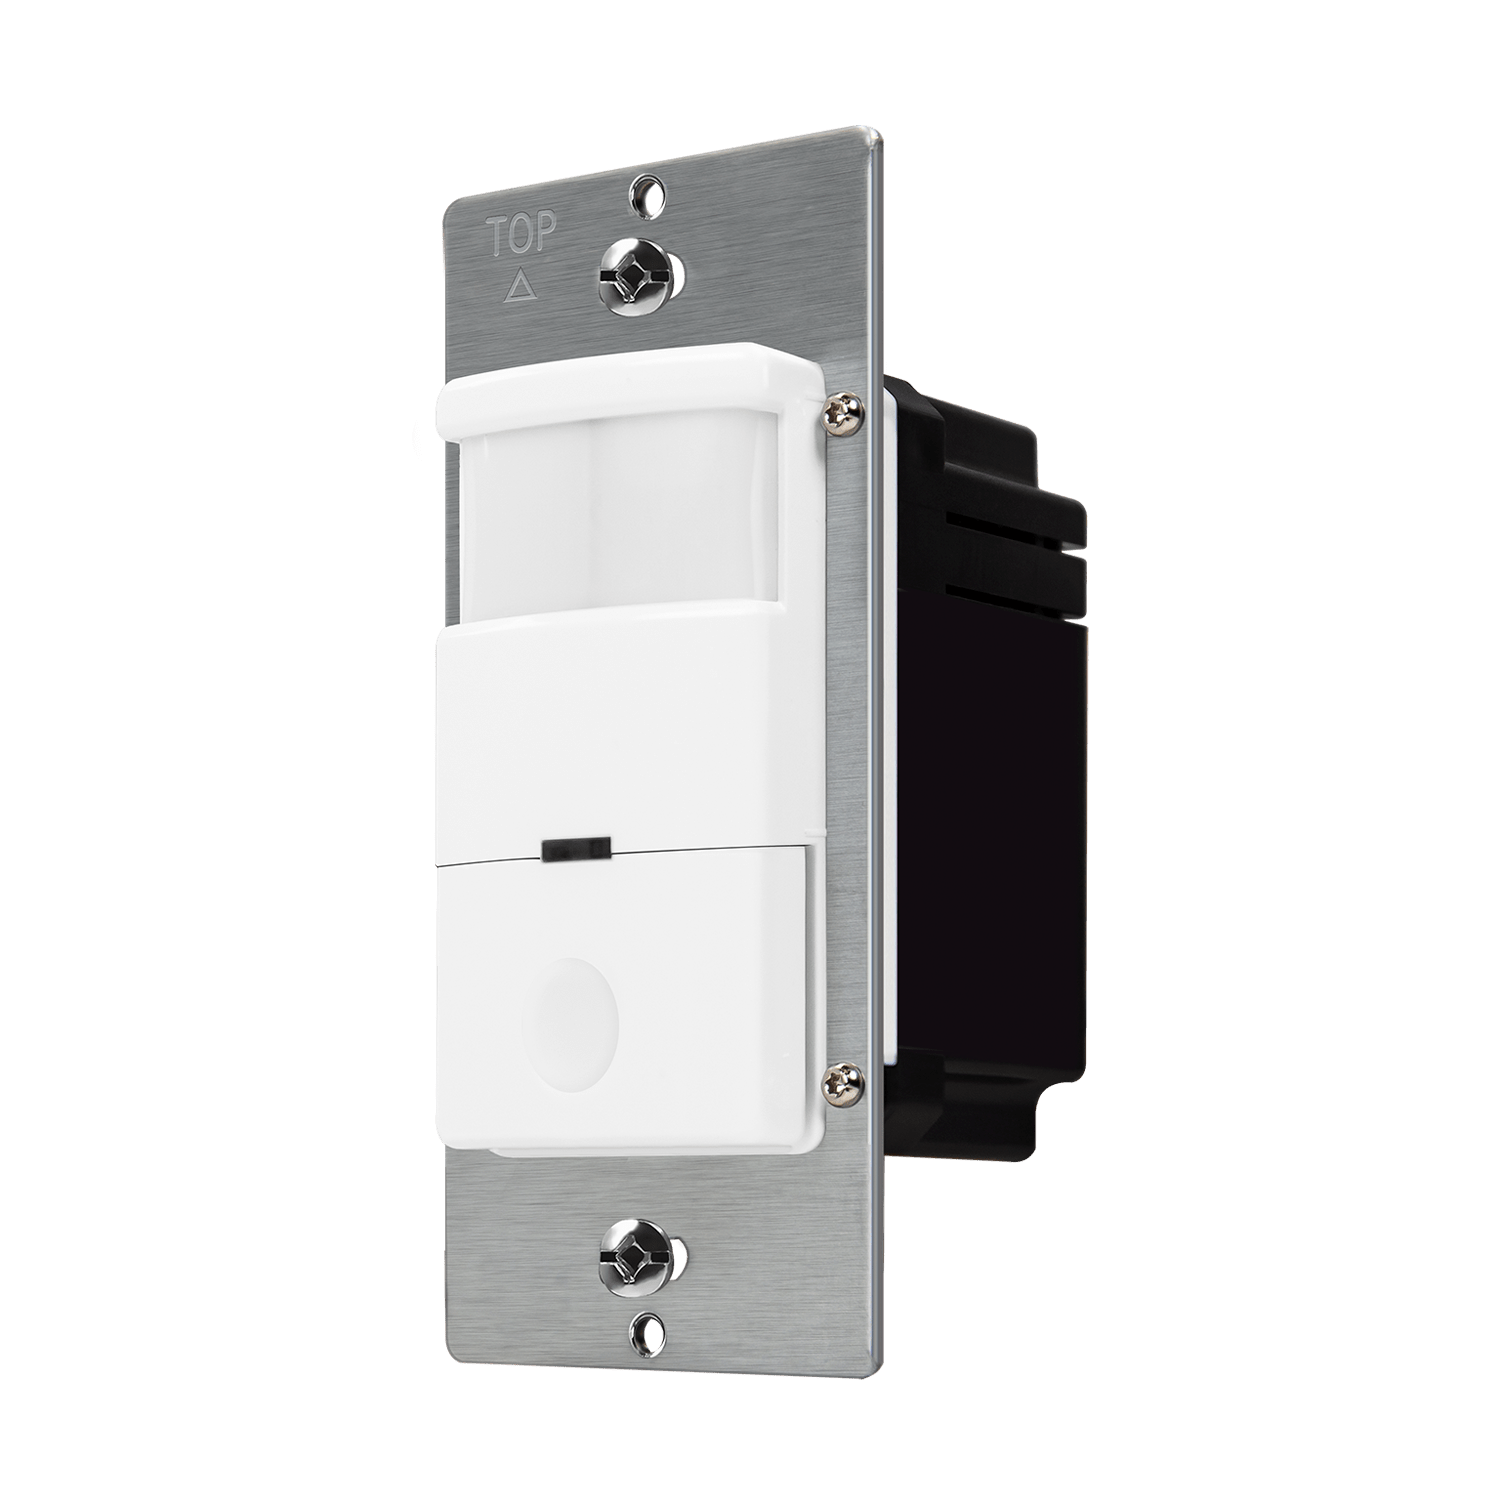 Enerlites DWOS-J 180° PIR Occupancy/Vacancy Motion Sensor Wall Switch, Single Pole - Sonic Electric